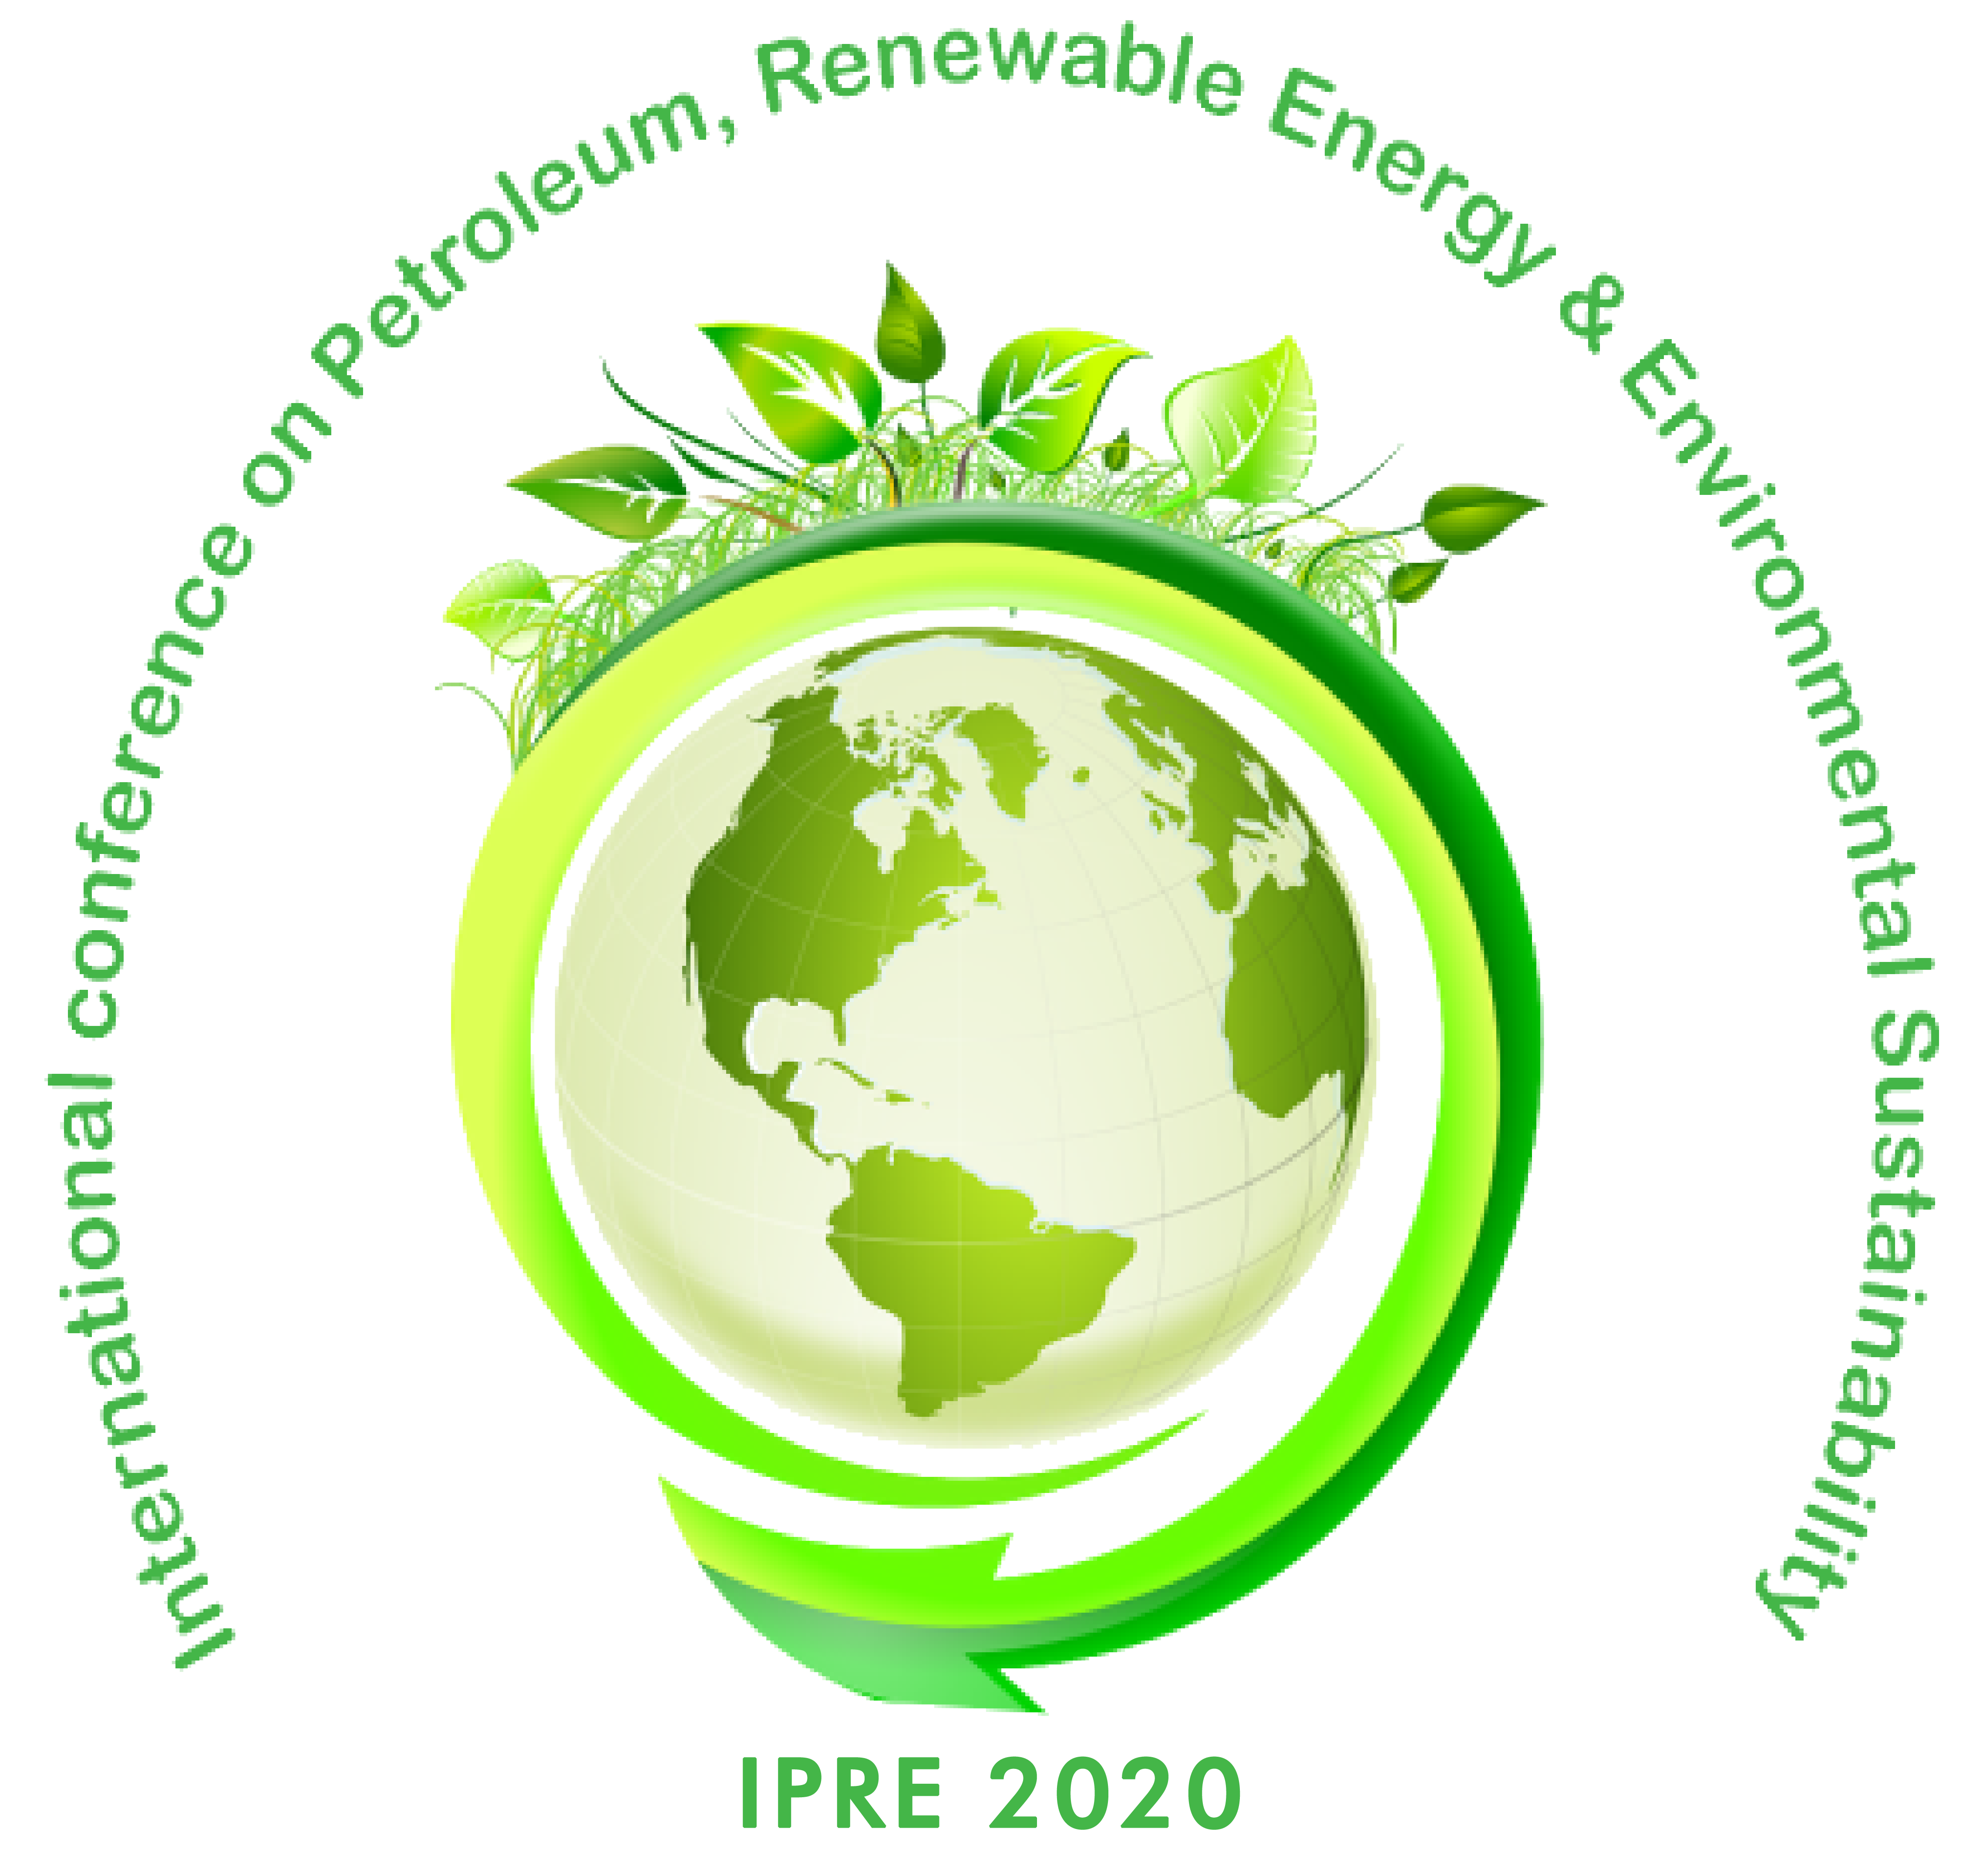 SCOPUS Indexed - International Conference on Petroleum, Renewable Energy & Environmental Sustainability (IPRE 2020)